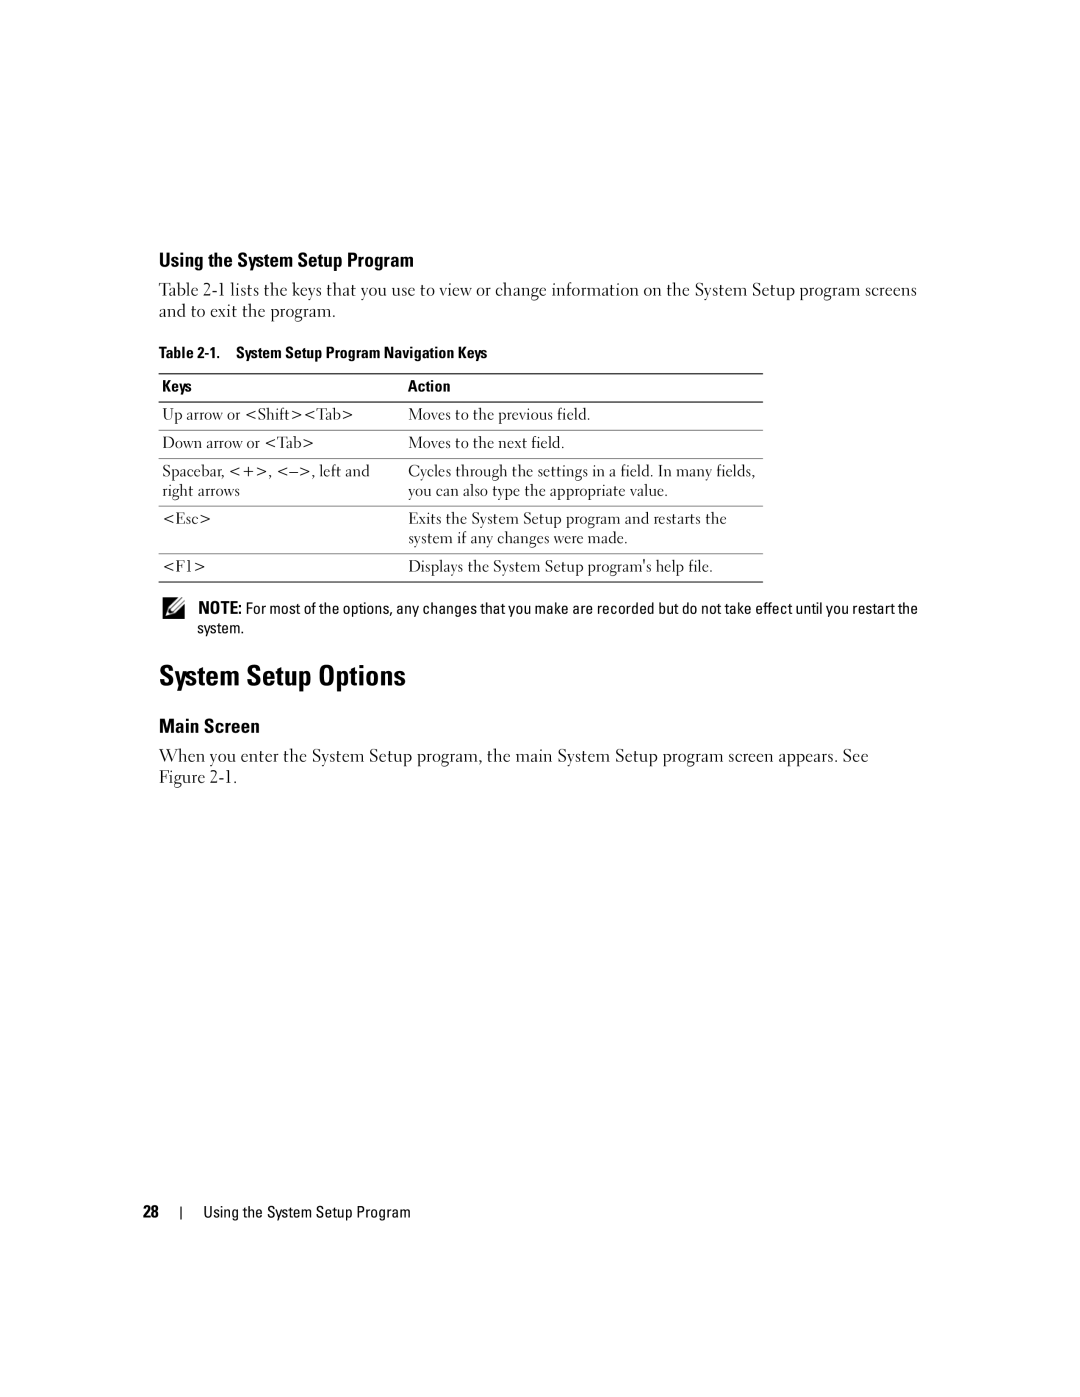 Dell SC1430 owner manual System Setup Options, Using the System Setup Program, Main Screen 